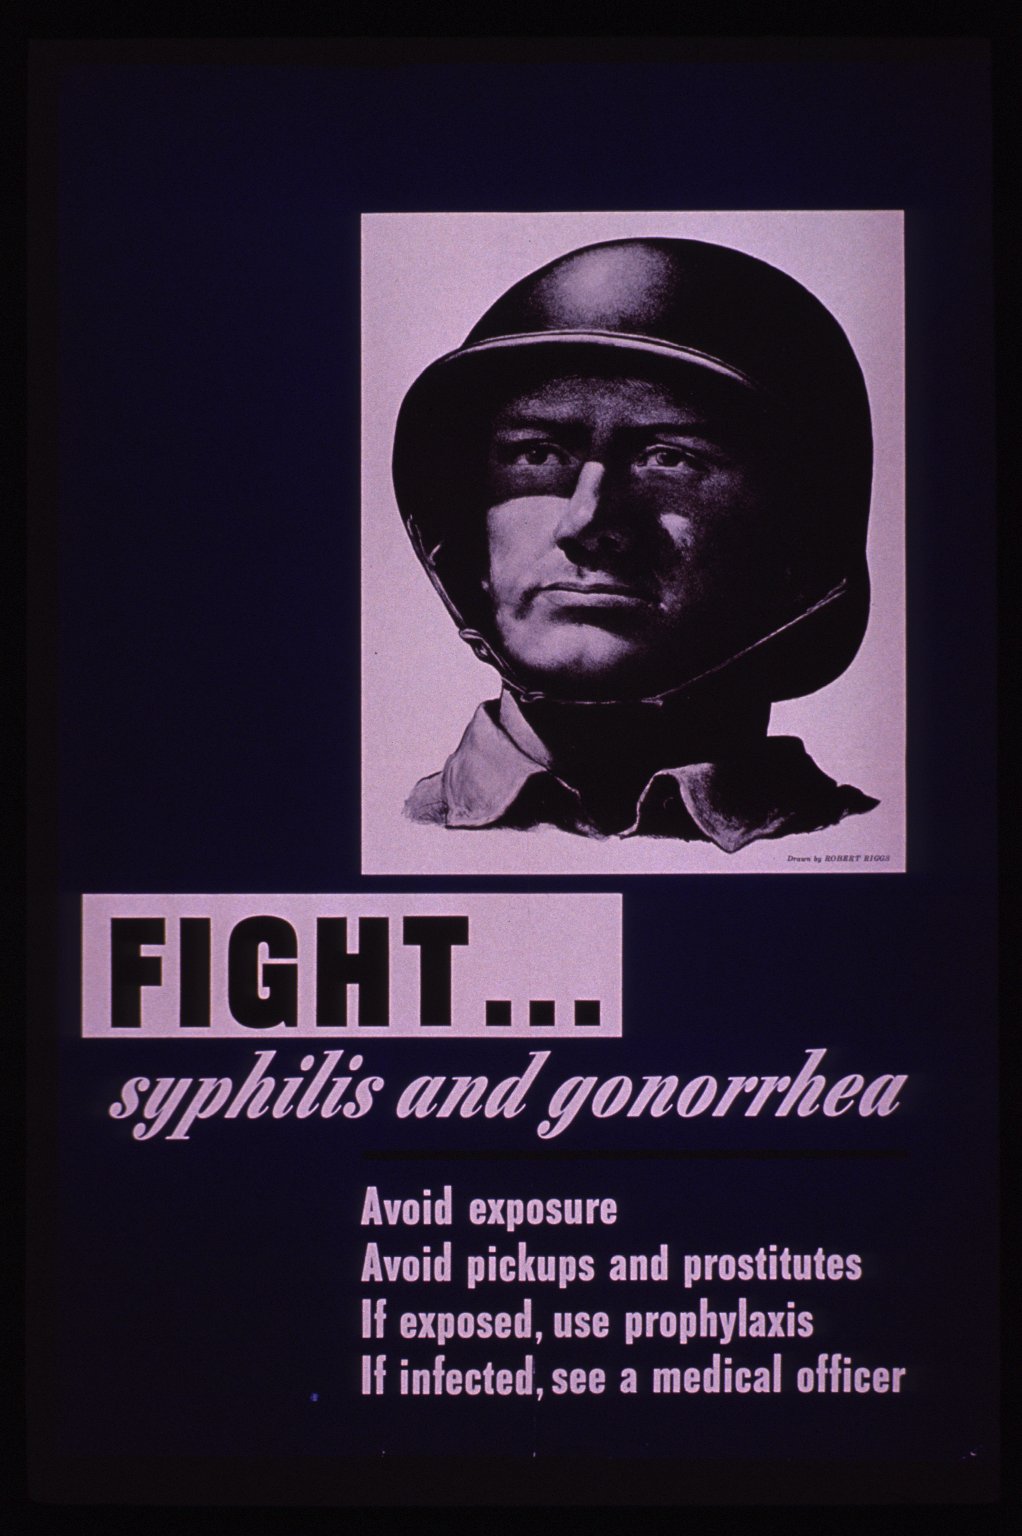 Venereal disease campaign poster U.S. Army, ca. 1942. Artist. Robert Riggs.